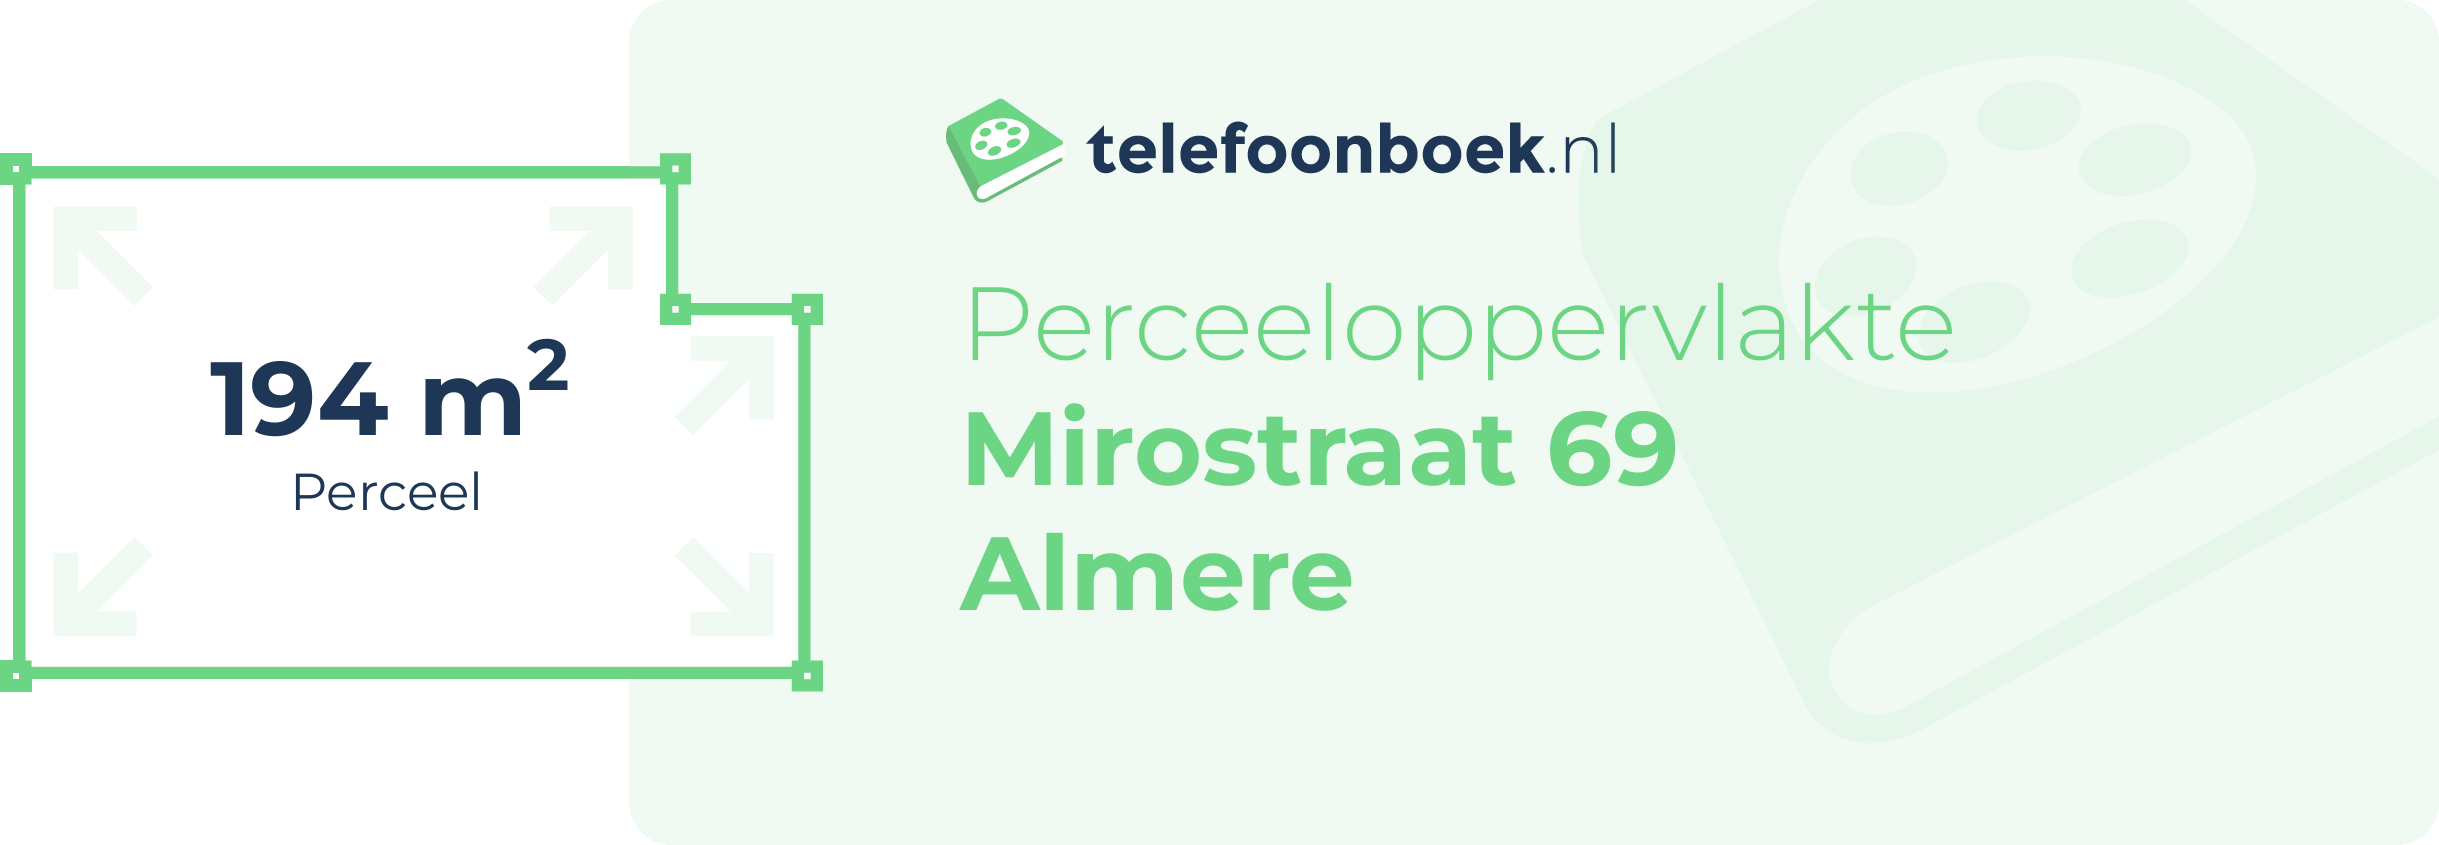 Perceeloppervlakte Mirostraat 69 Almere